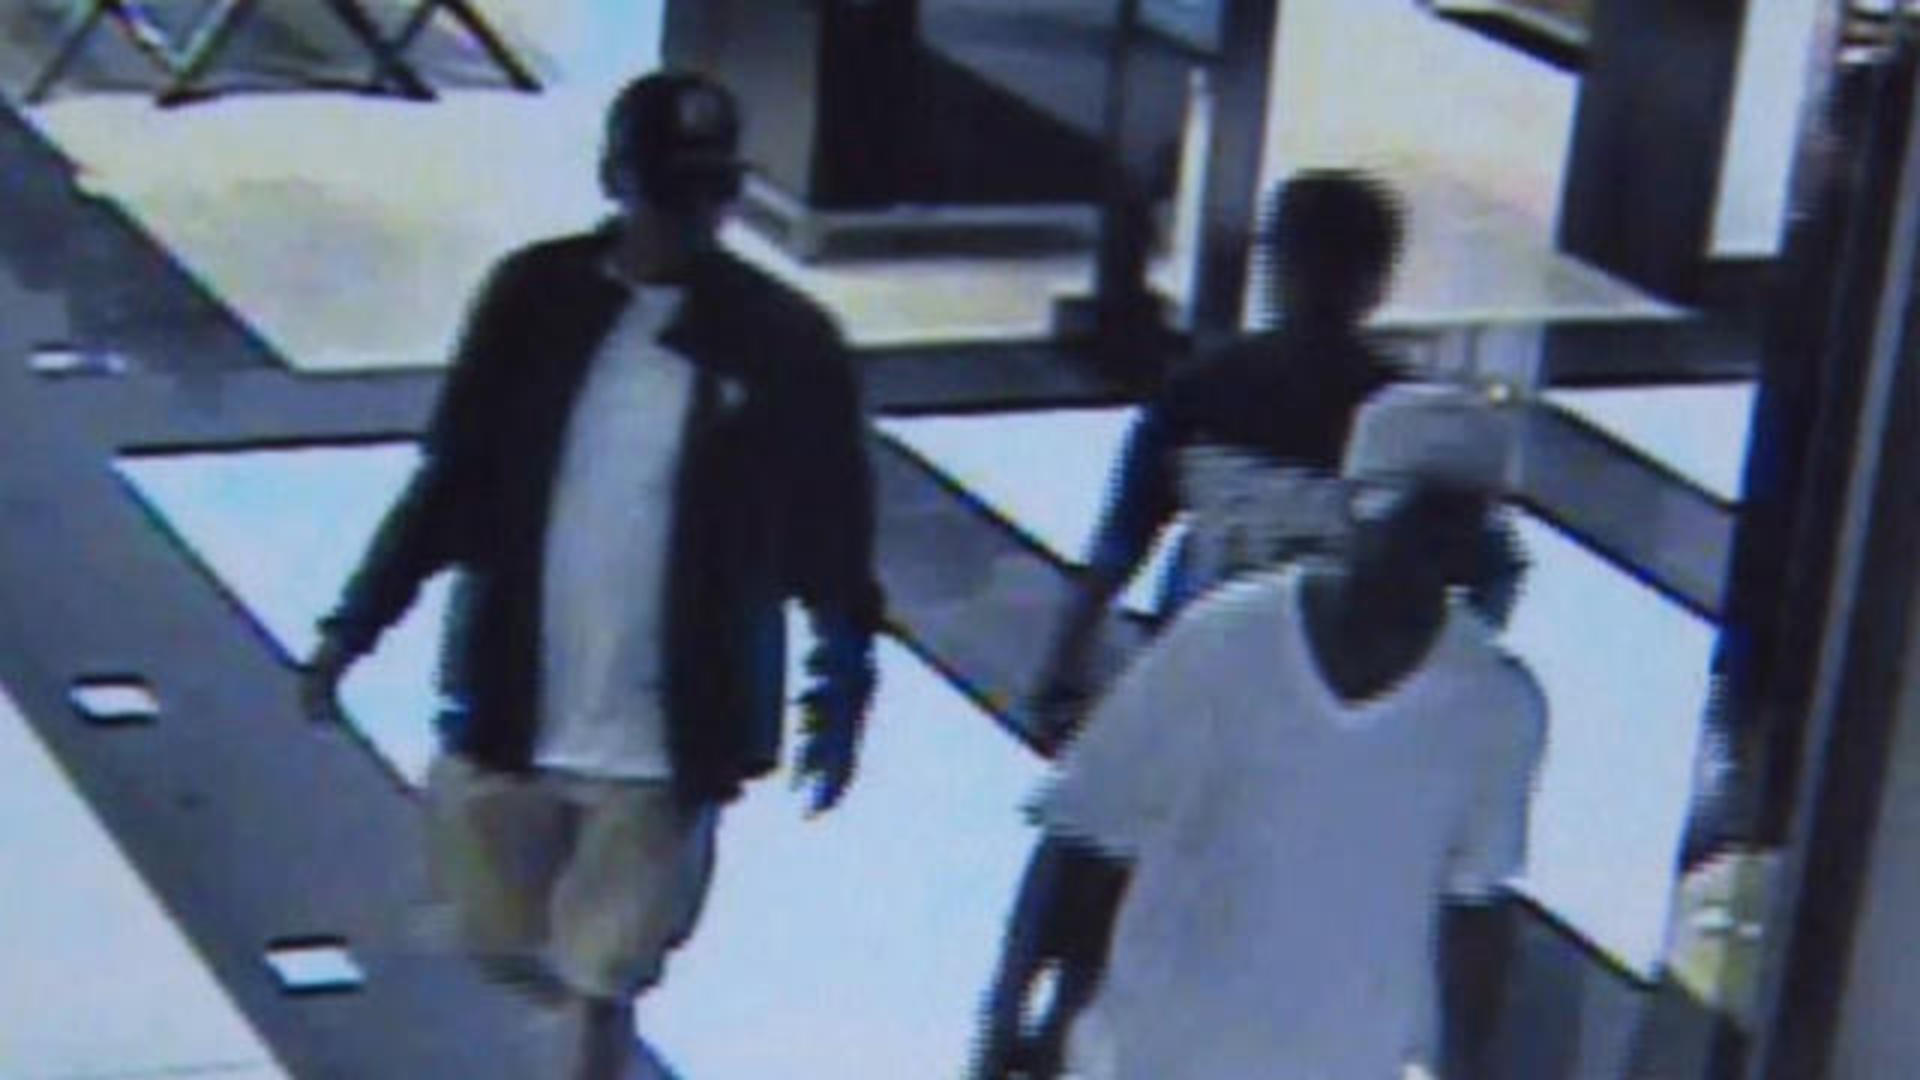 beha navigatie Verdeel Thieves caught on camera robbing Gucci store - CBS News